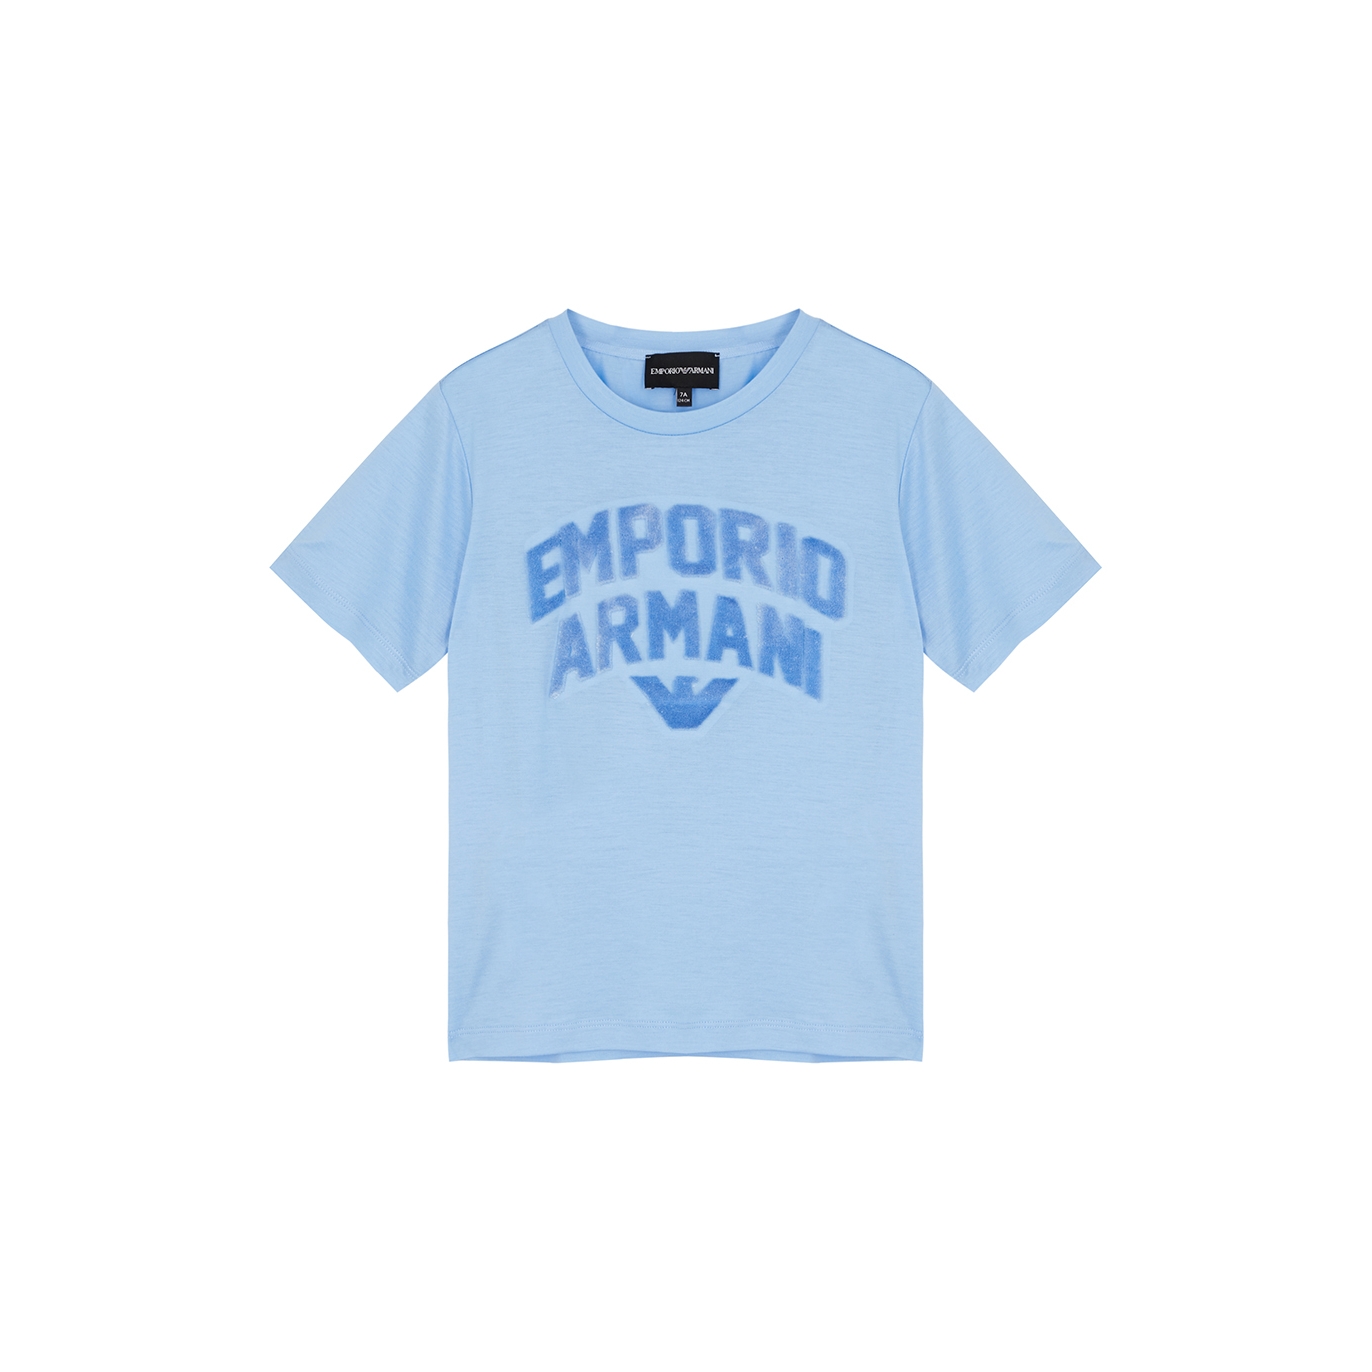 Emporio Armani Kids Logo Jersey T-shirt - Blue - 10 Years